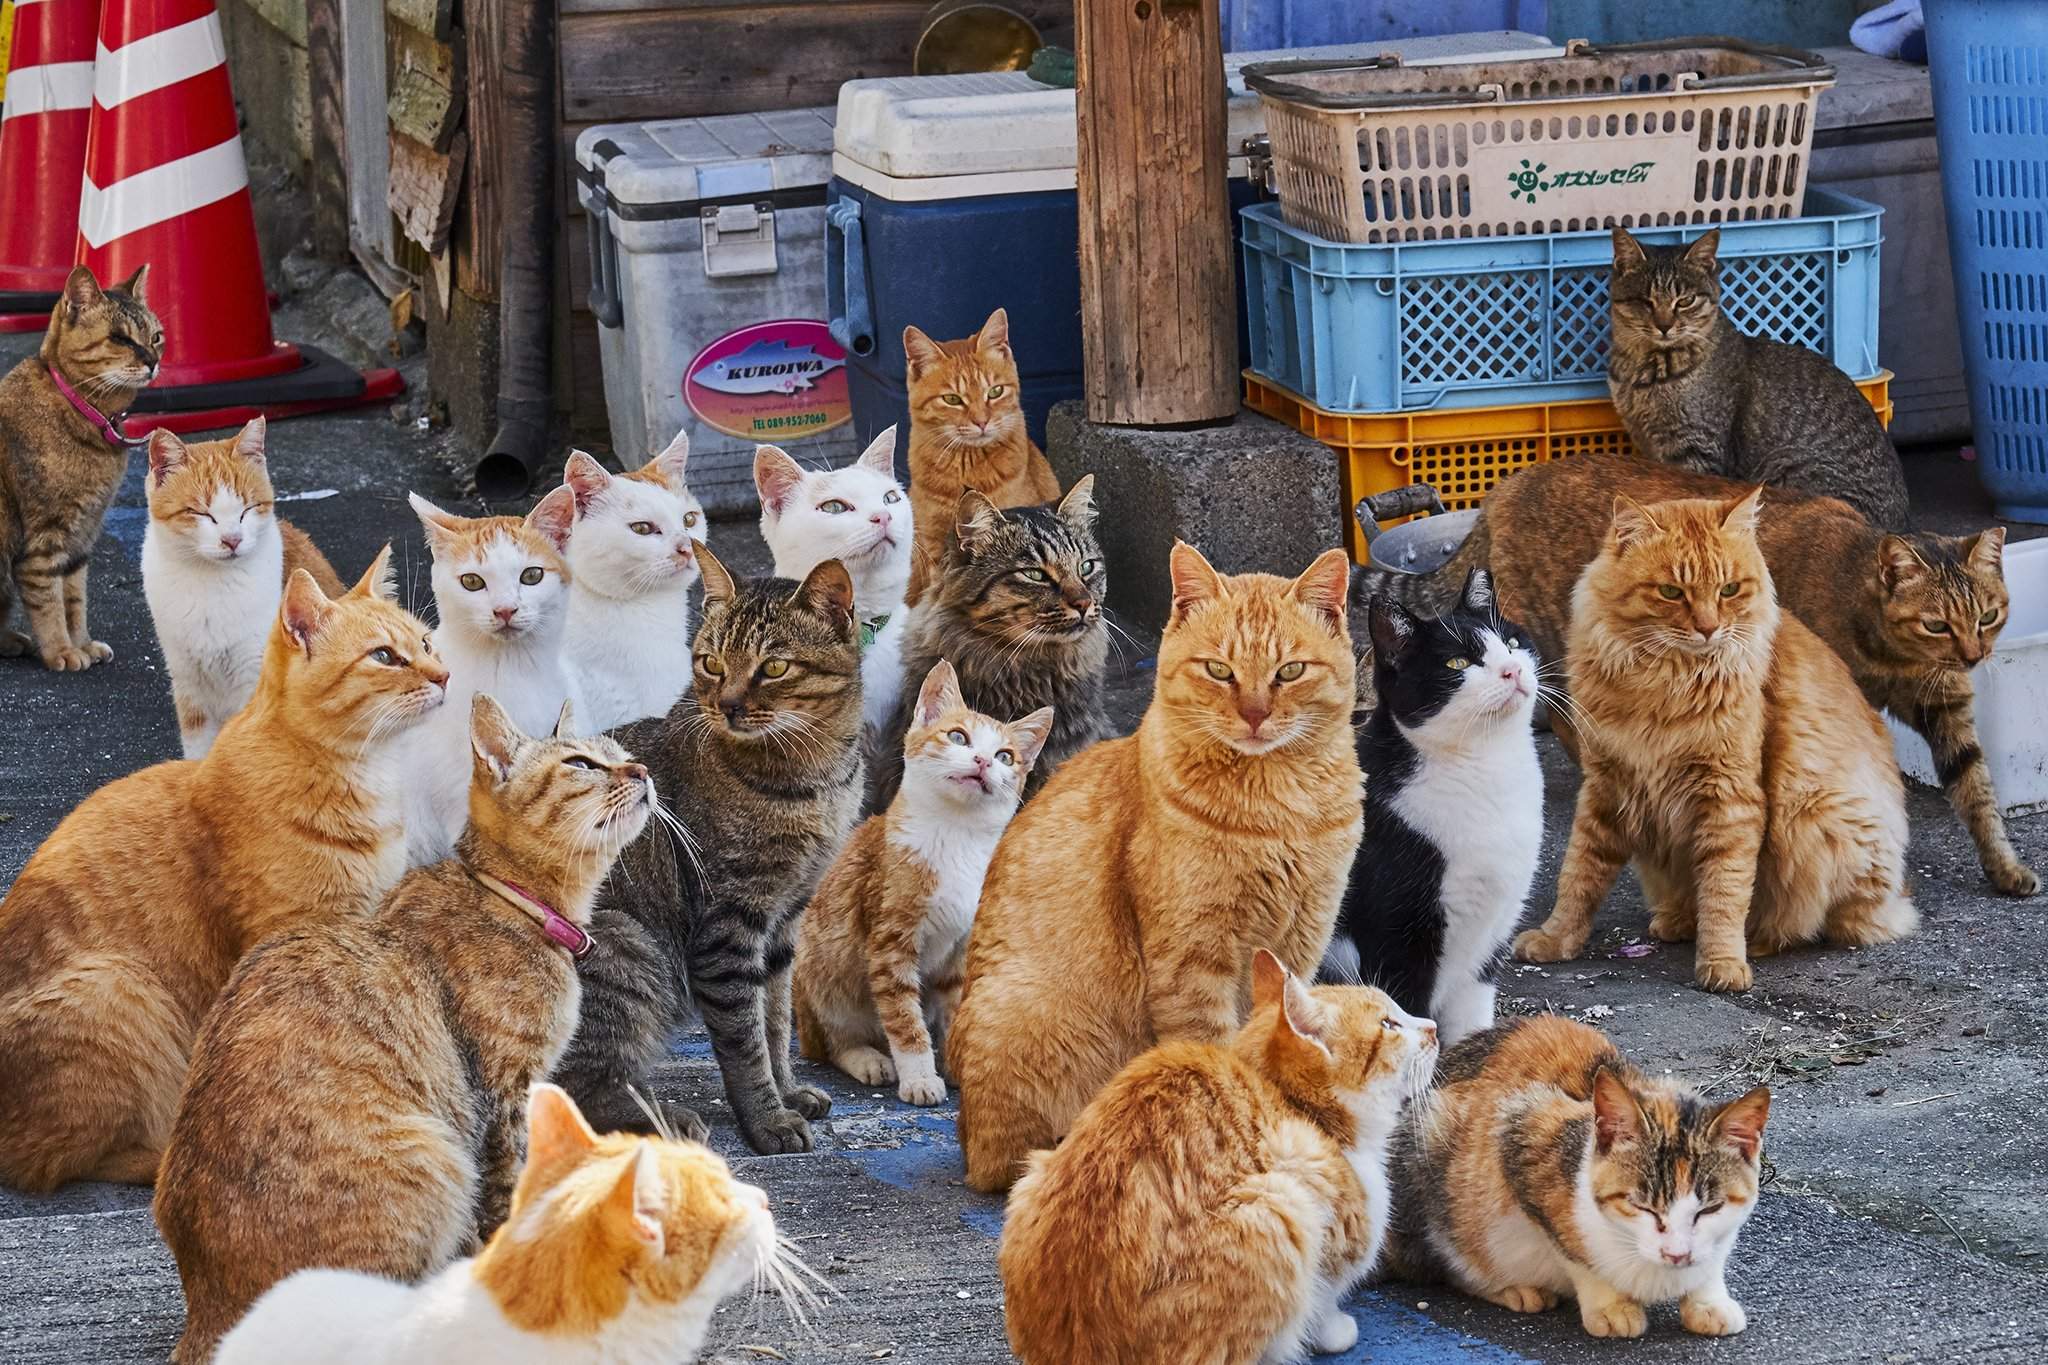 Включи много котика. Тасиро остров кошек. Остров Аосима остров кошек. Тасиро остров кошек в Японии. Остров Фраджост кошачий остров.